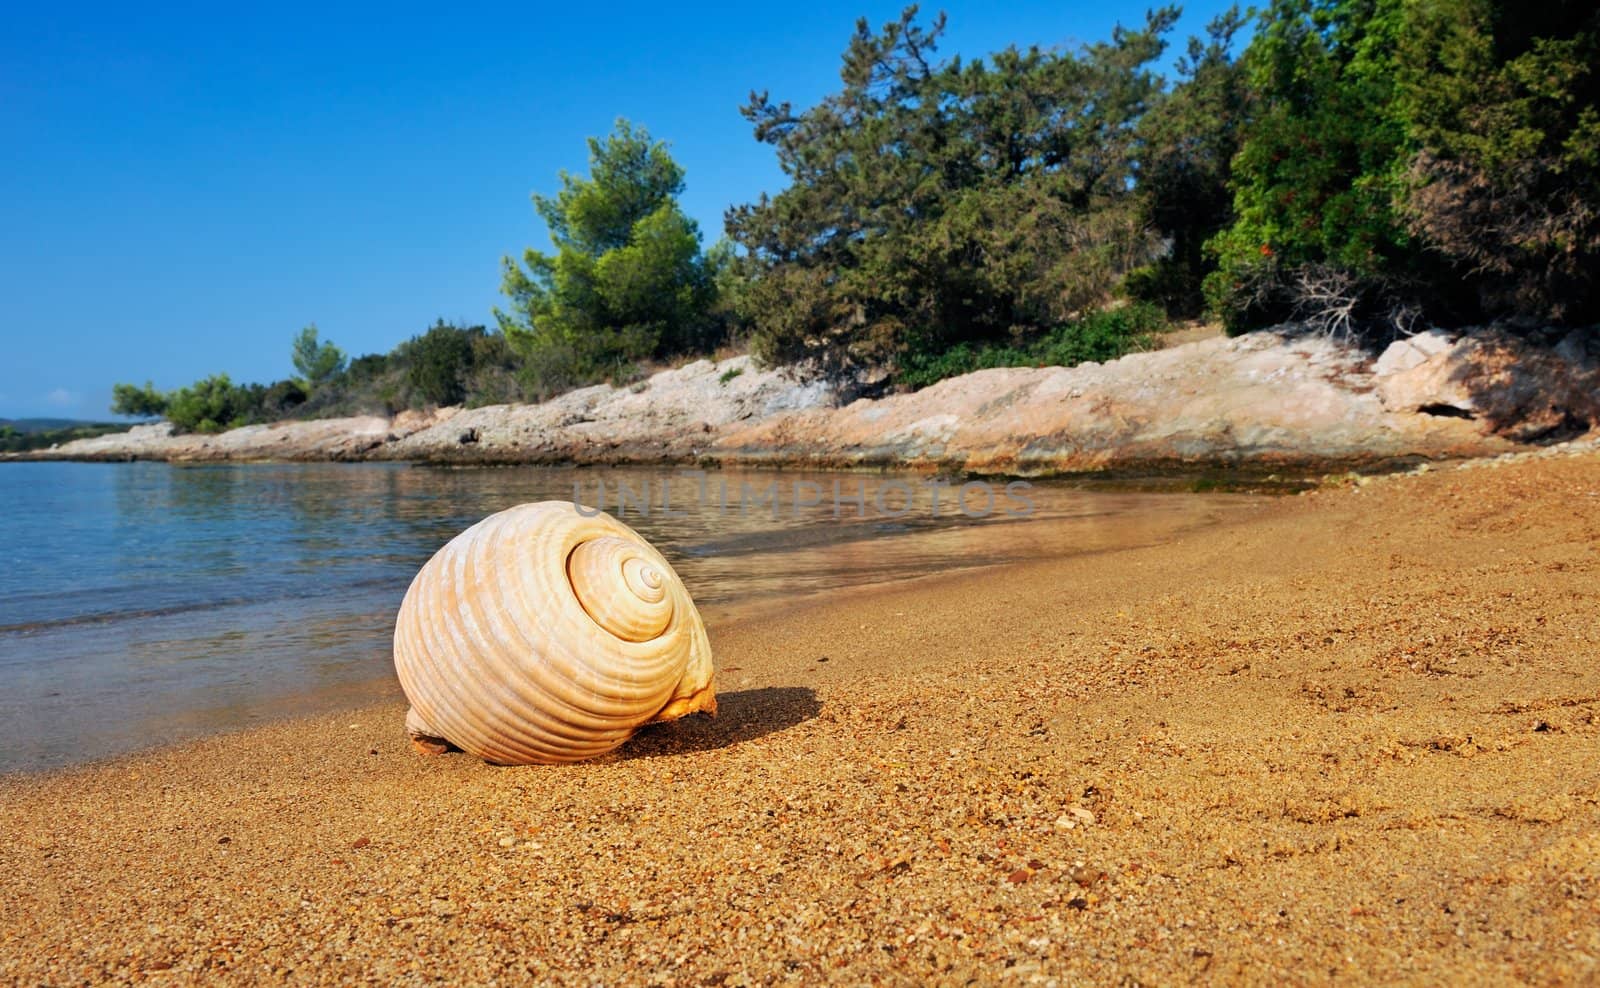 Seashell on a sandy beach in the Mediterranean by akarelias